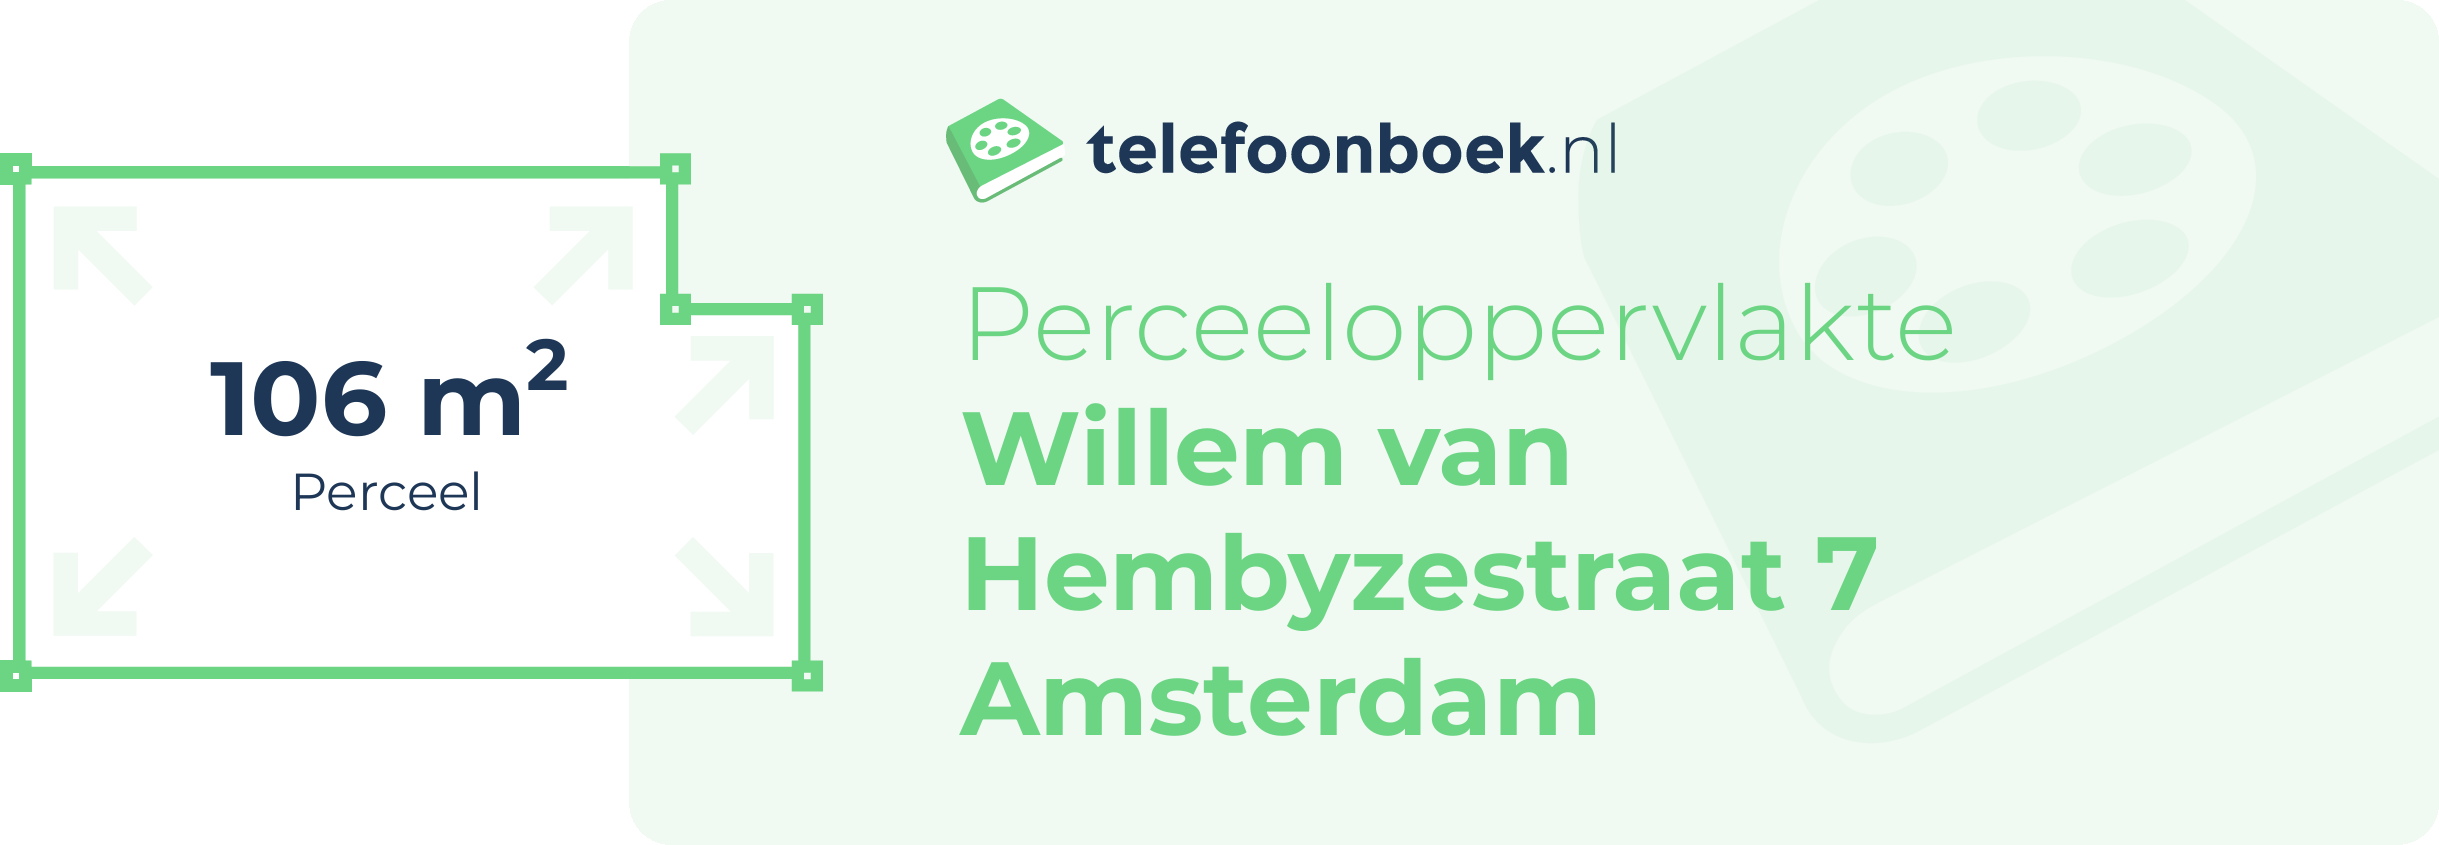 Perceeloppervlakte Willem Van Hembyzestraat 7 Amsterdam